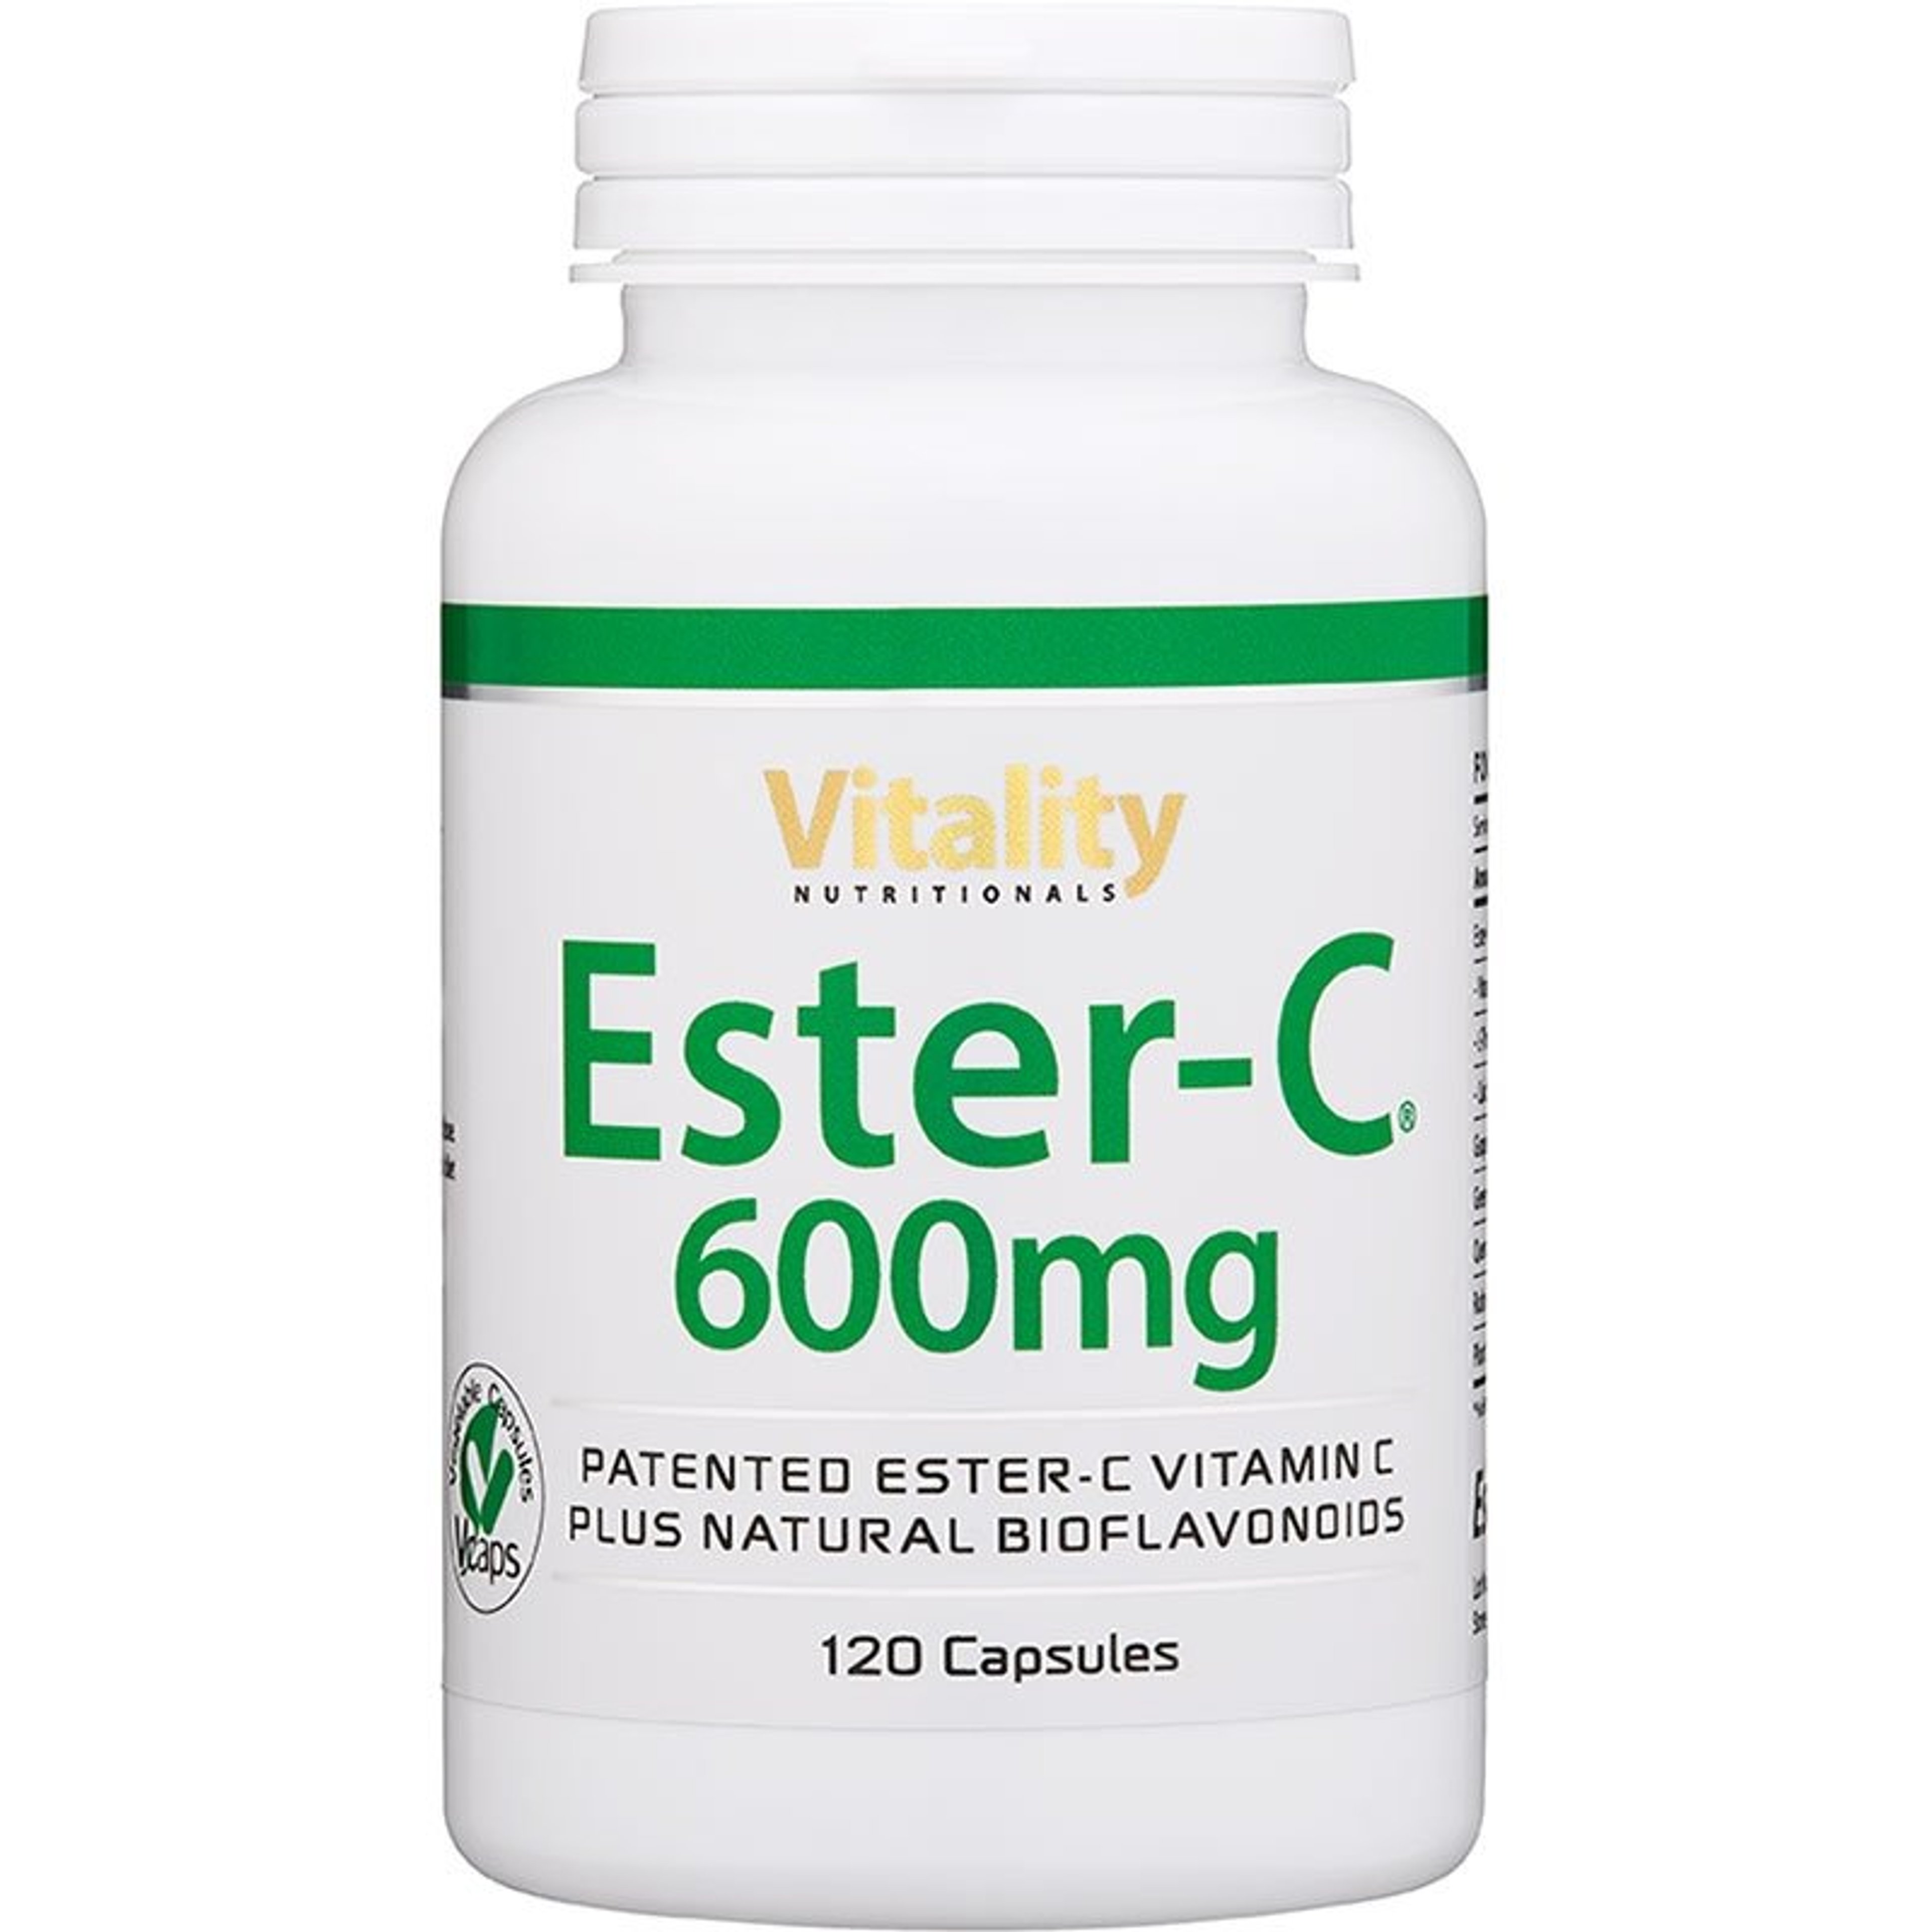 vitality-nutritionals-ester-c-600mg_1.jpg